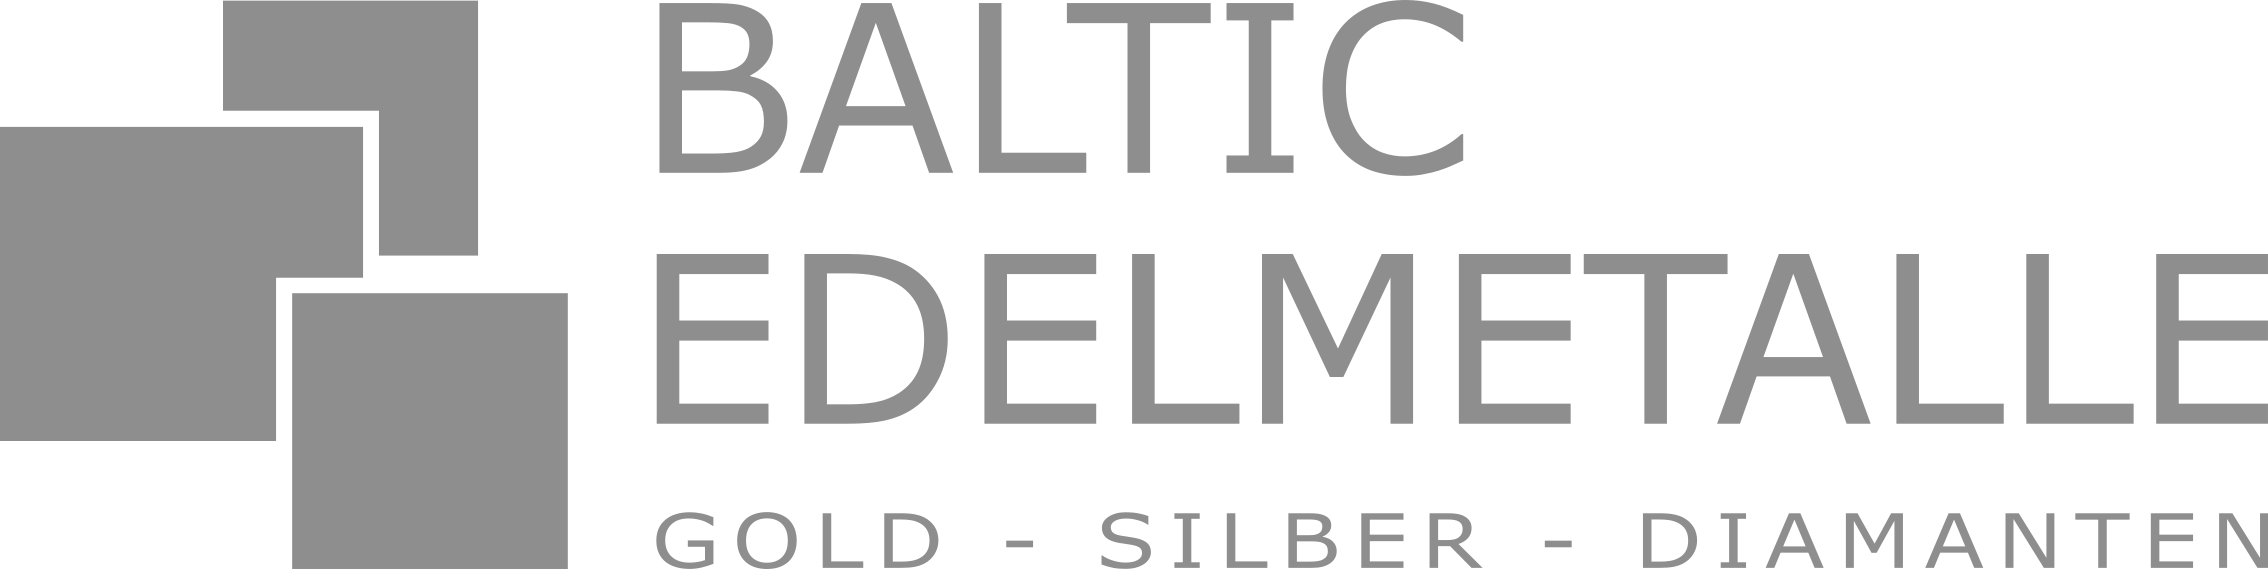 Baltic Edelmetalle Logo (grau)